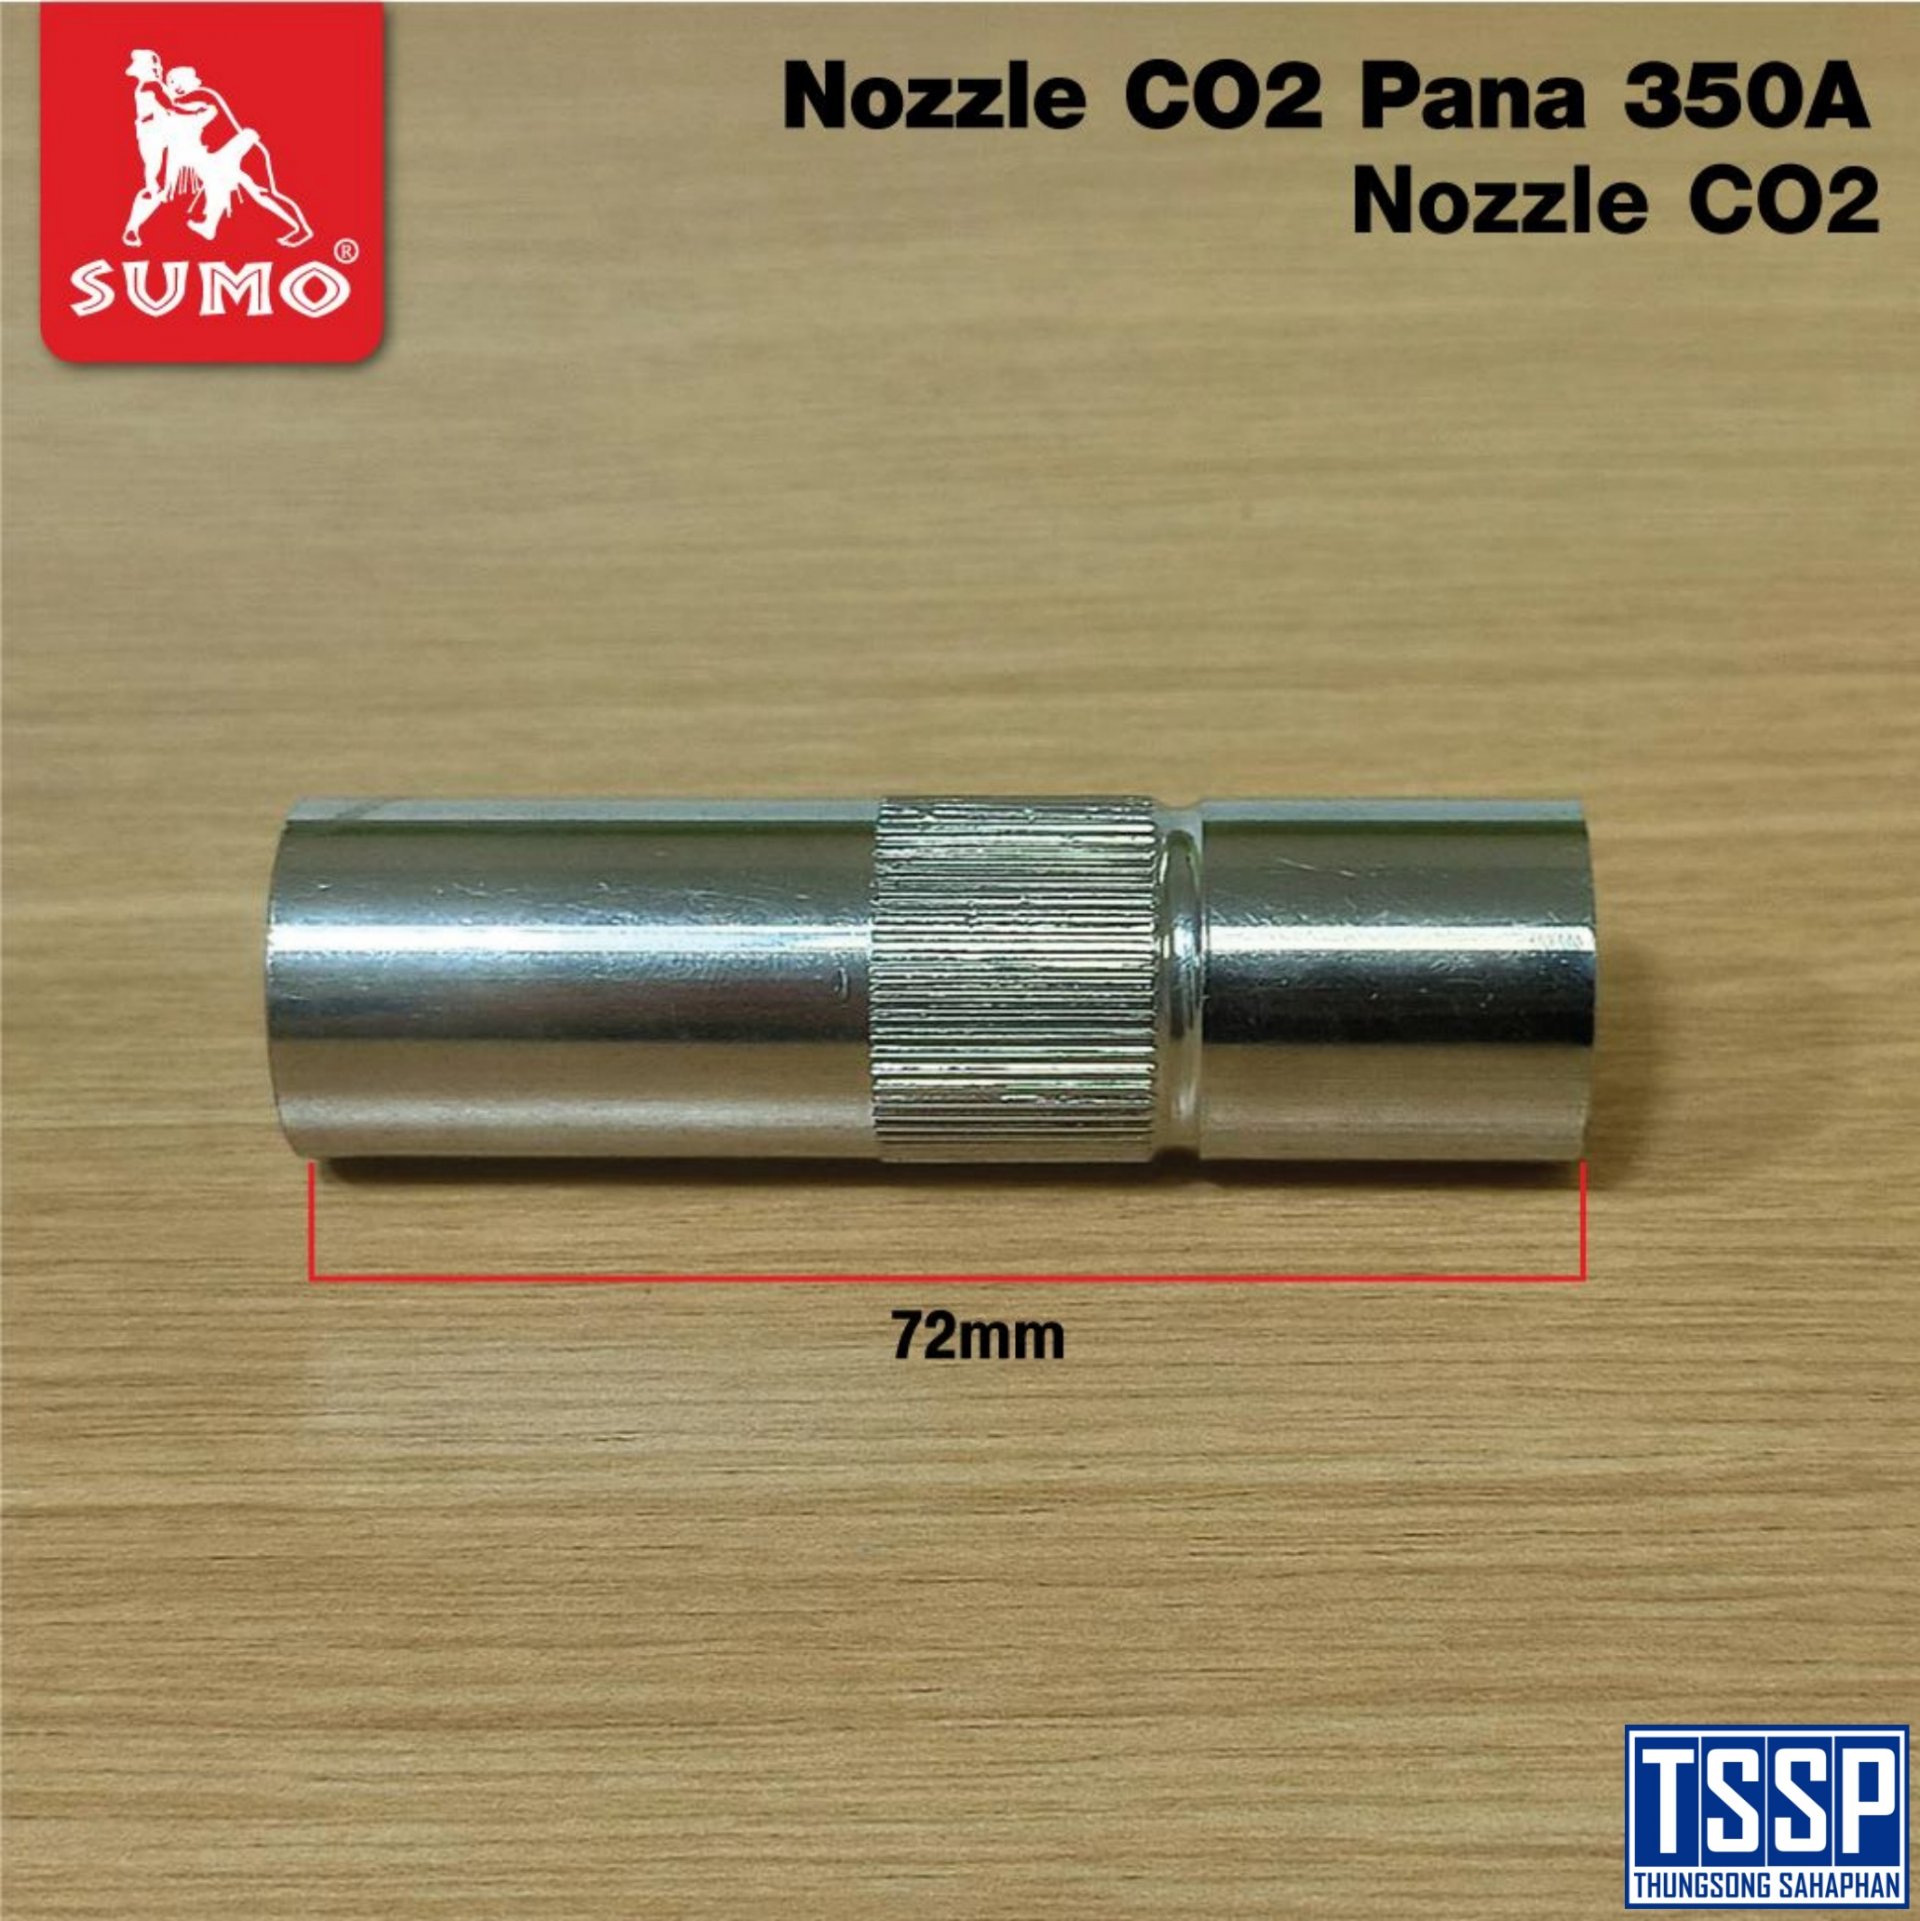 Nozzle CO2 PANA 350A